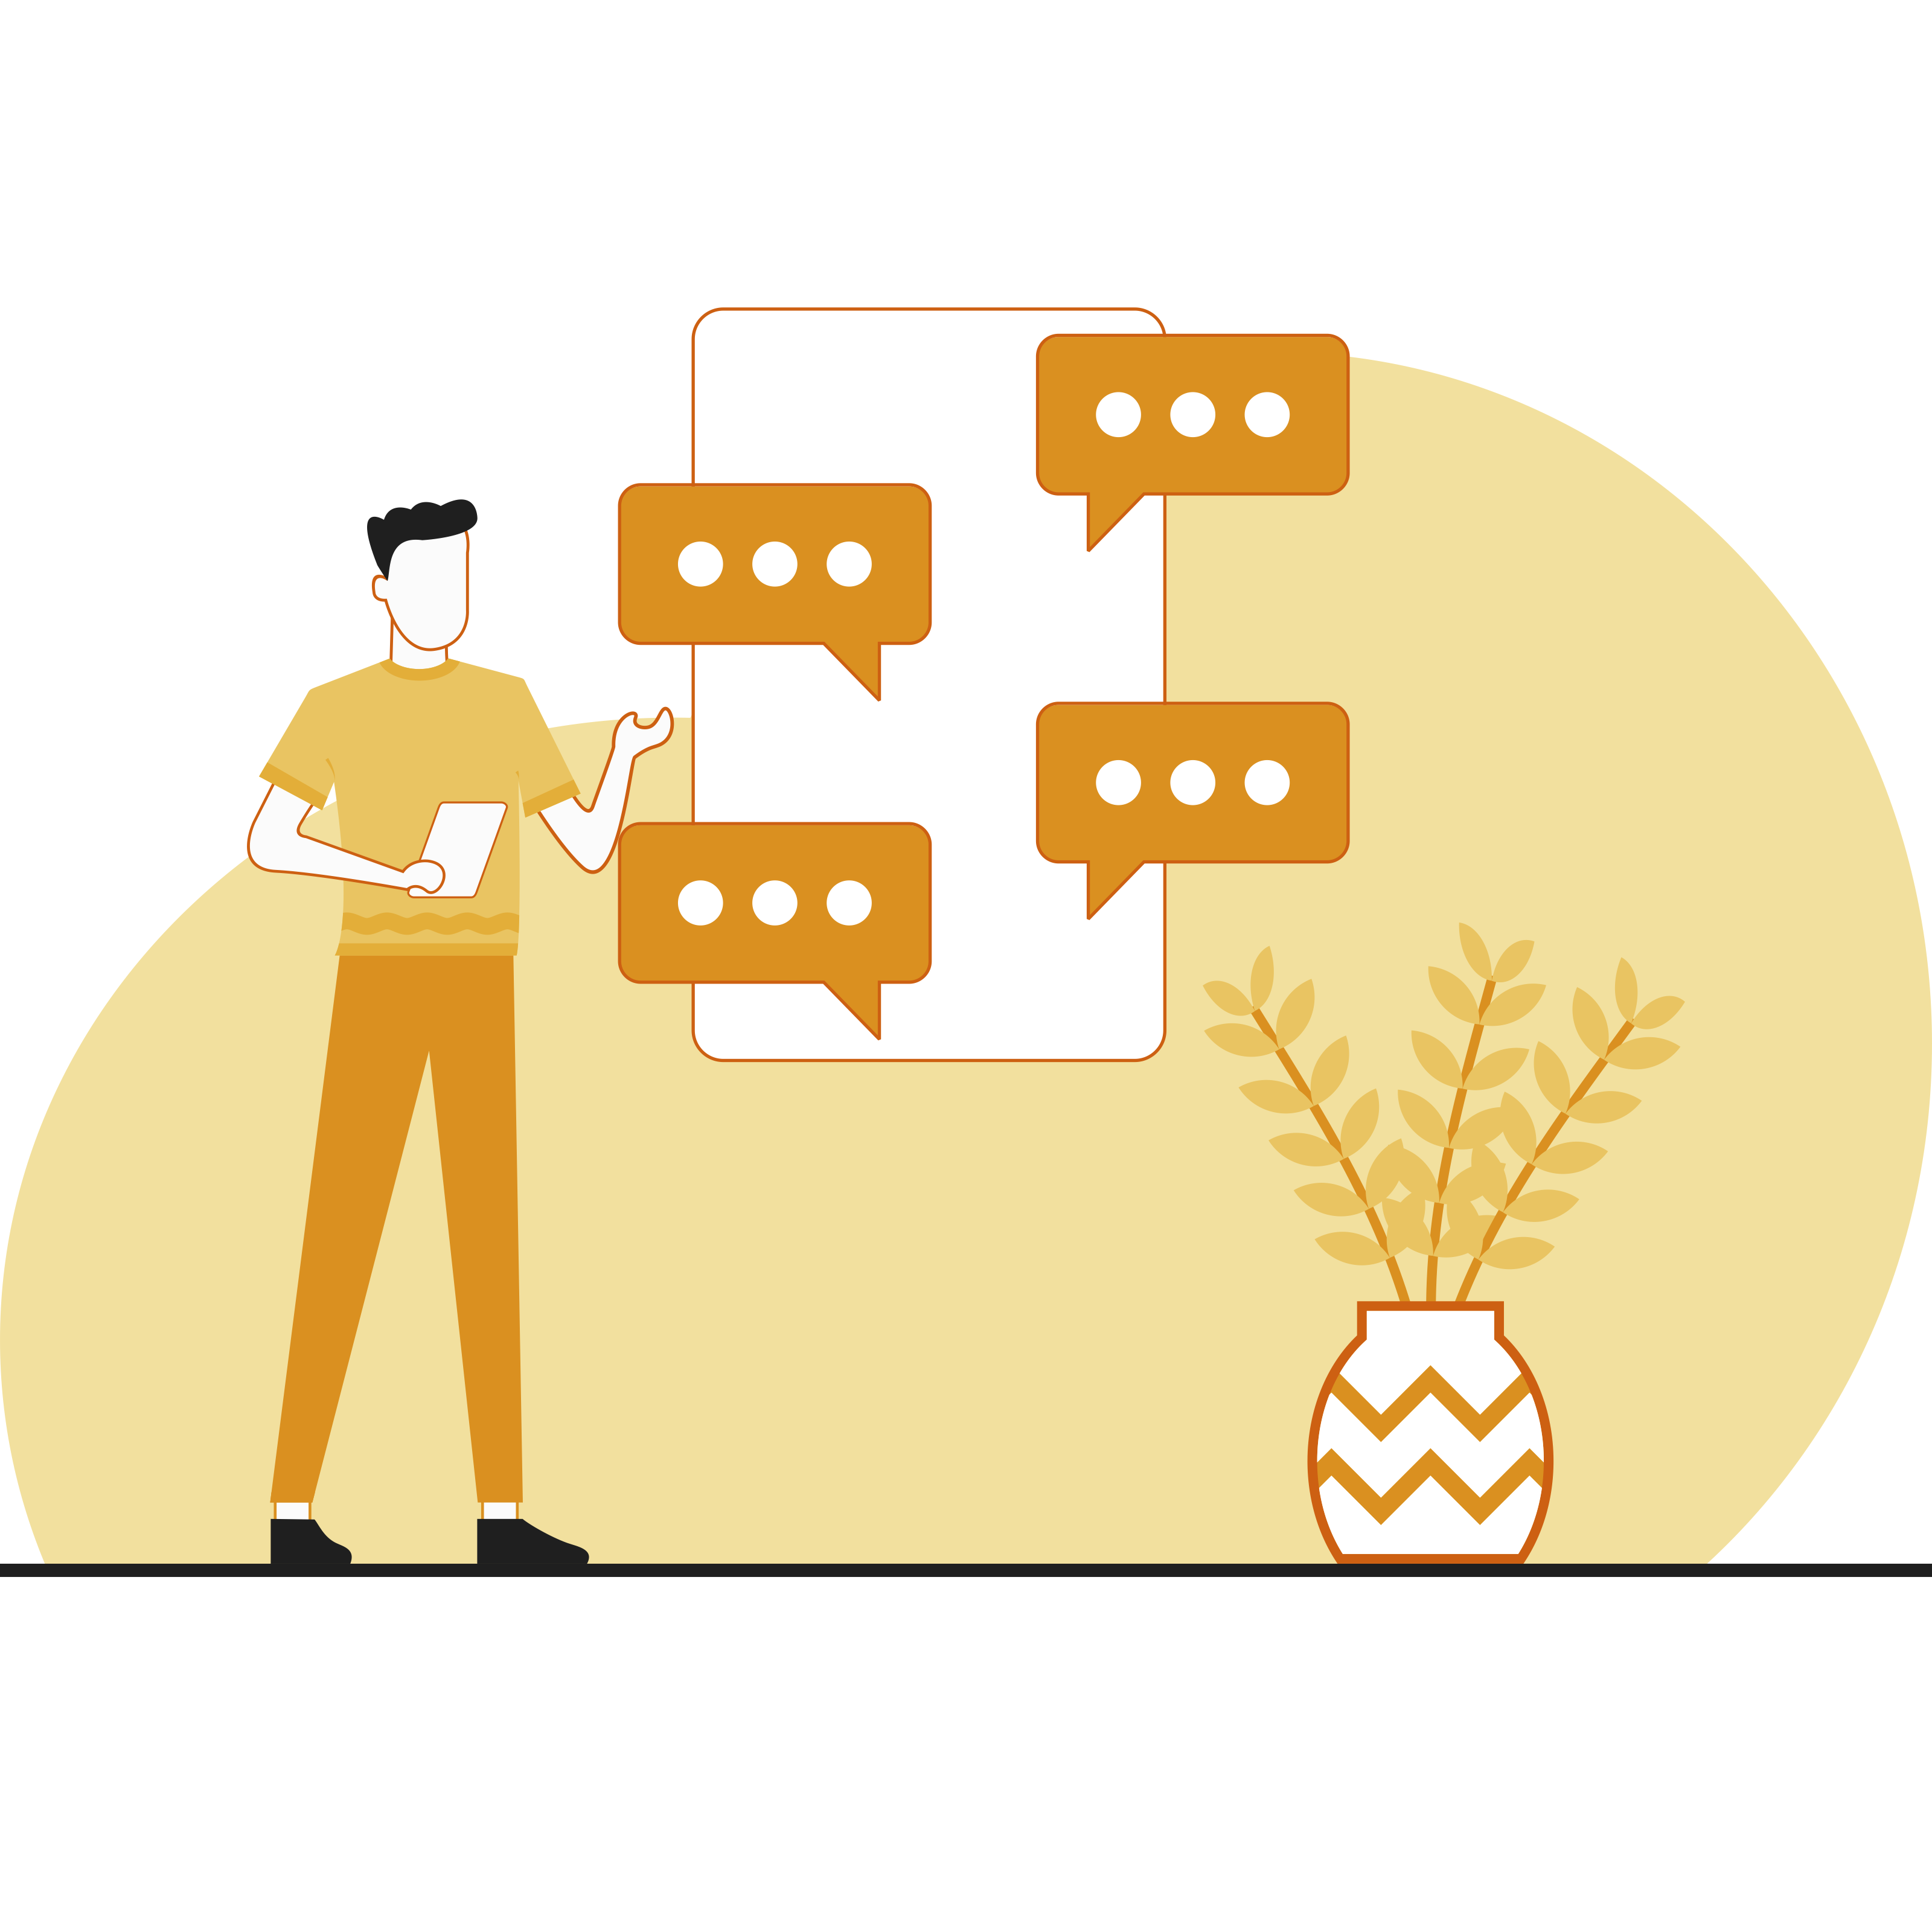 teamwork-contact-yellow-background-shop-flat-data-app-business-technology-marketing-online-illustration-illustration